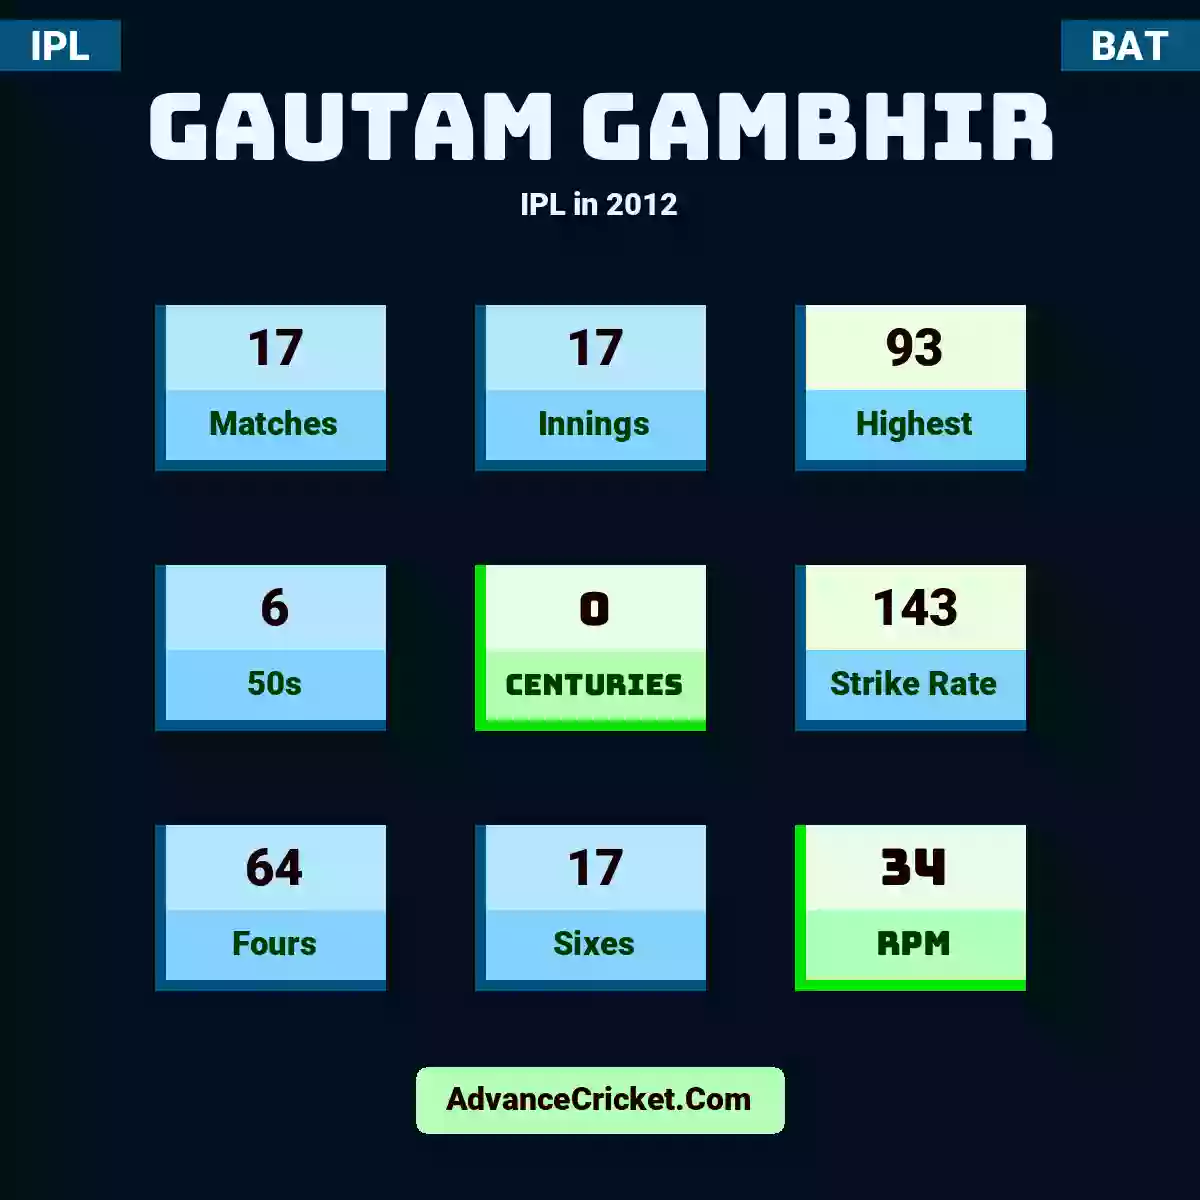 Gautam Gambhir IPL  in 2012, Gautam Gambhir played 17 matches, scored 93 runs as highest, 6 half-centuries, and 0 centuries, with a strike rate of 143. G.Gambhir hit 64 fours and 17 sixes, with an RPM of 34.